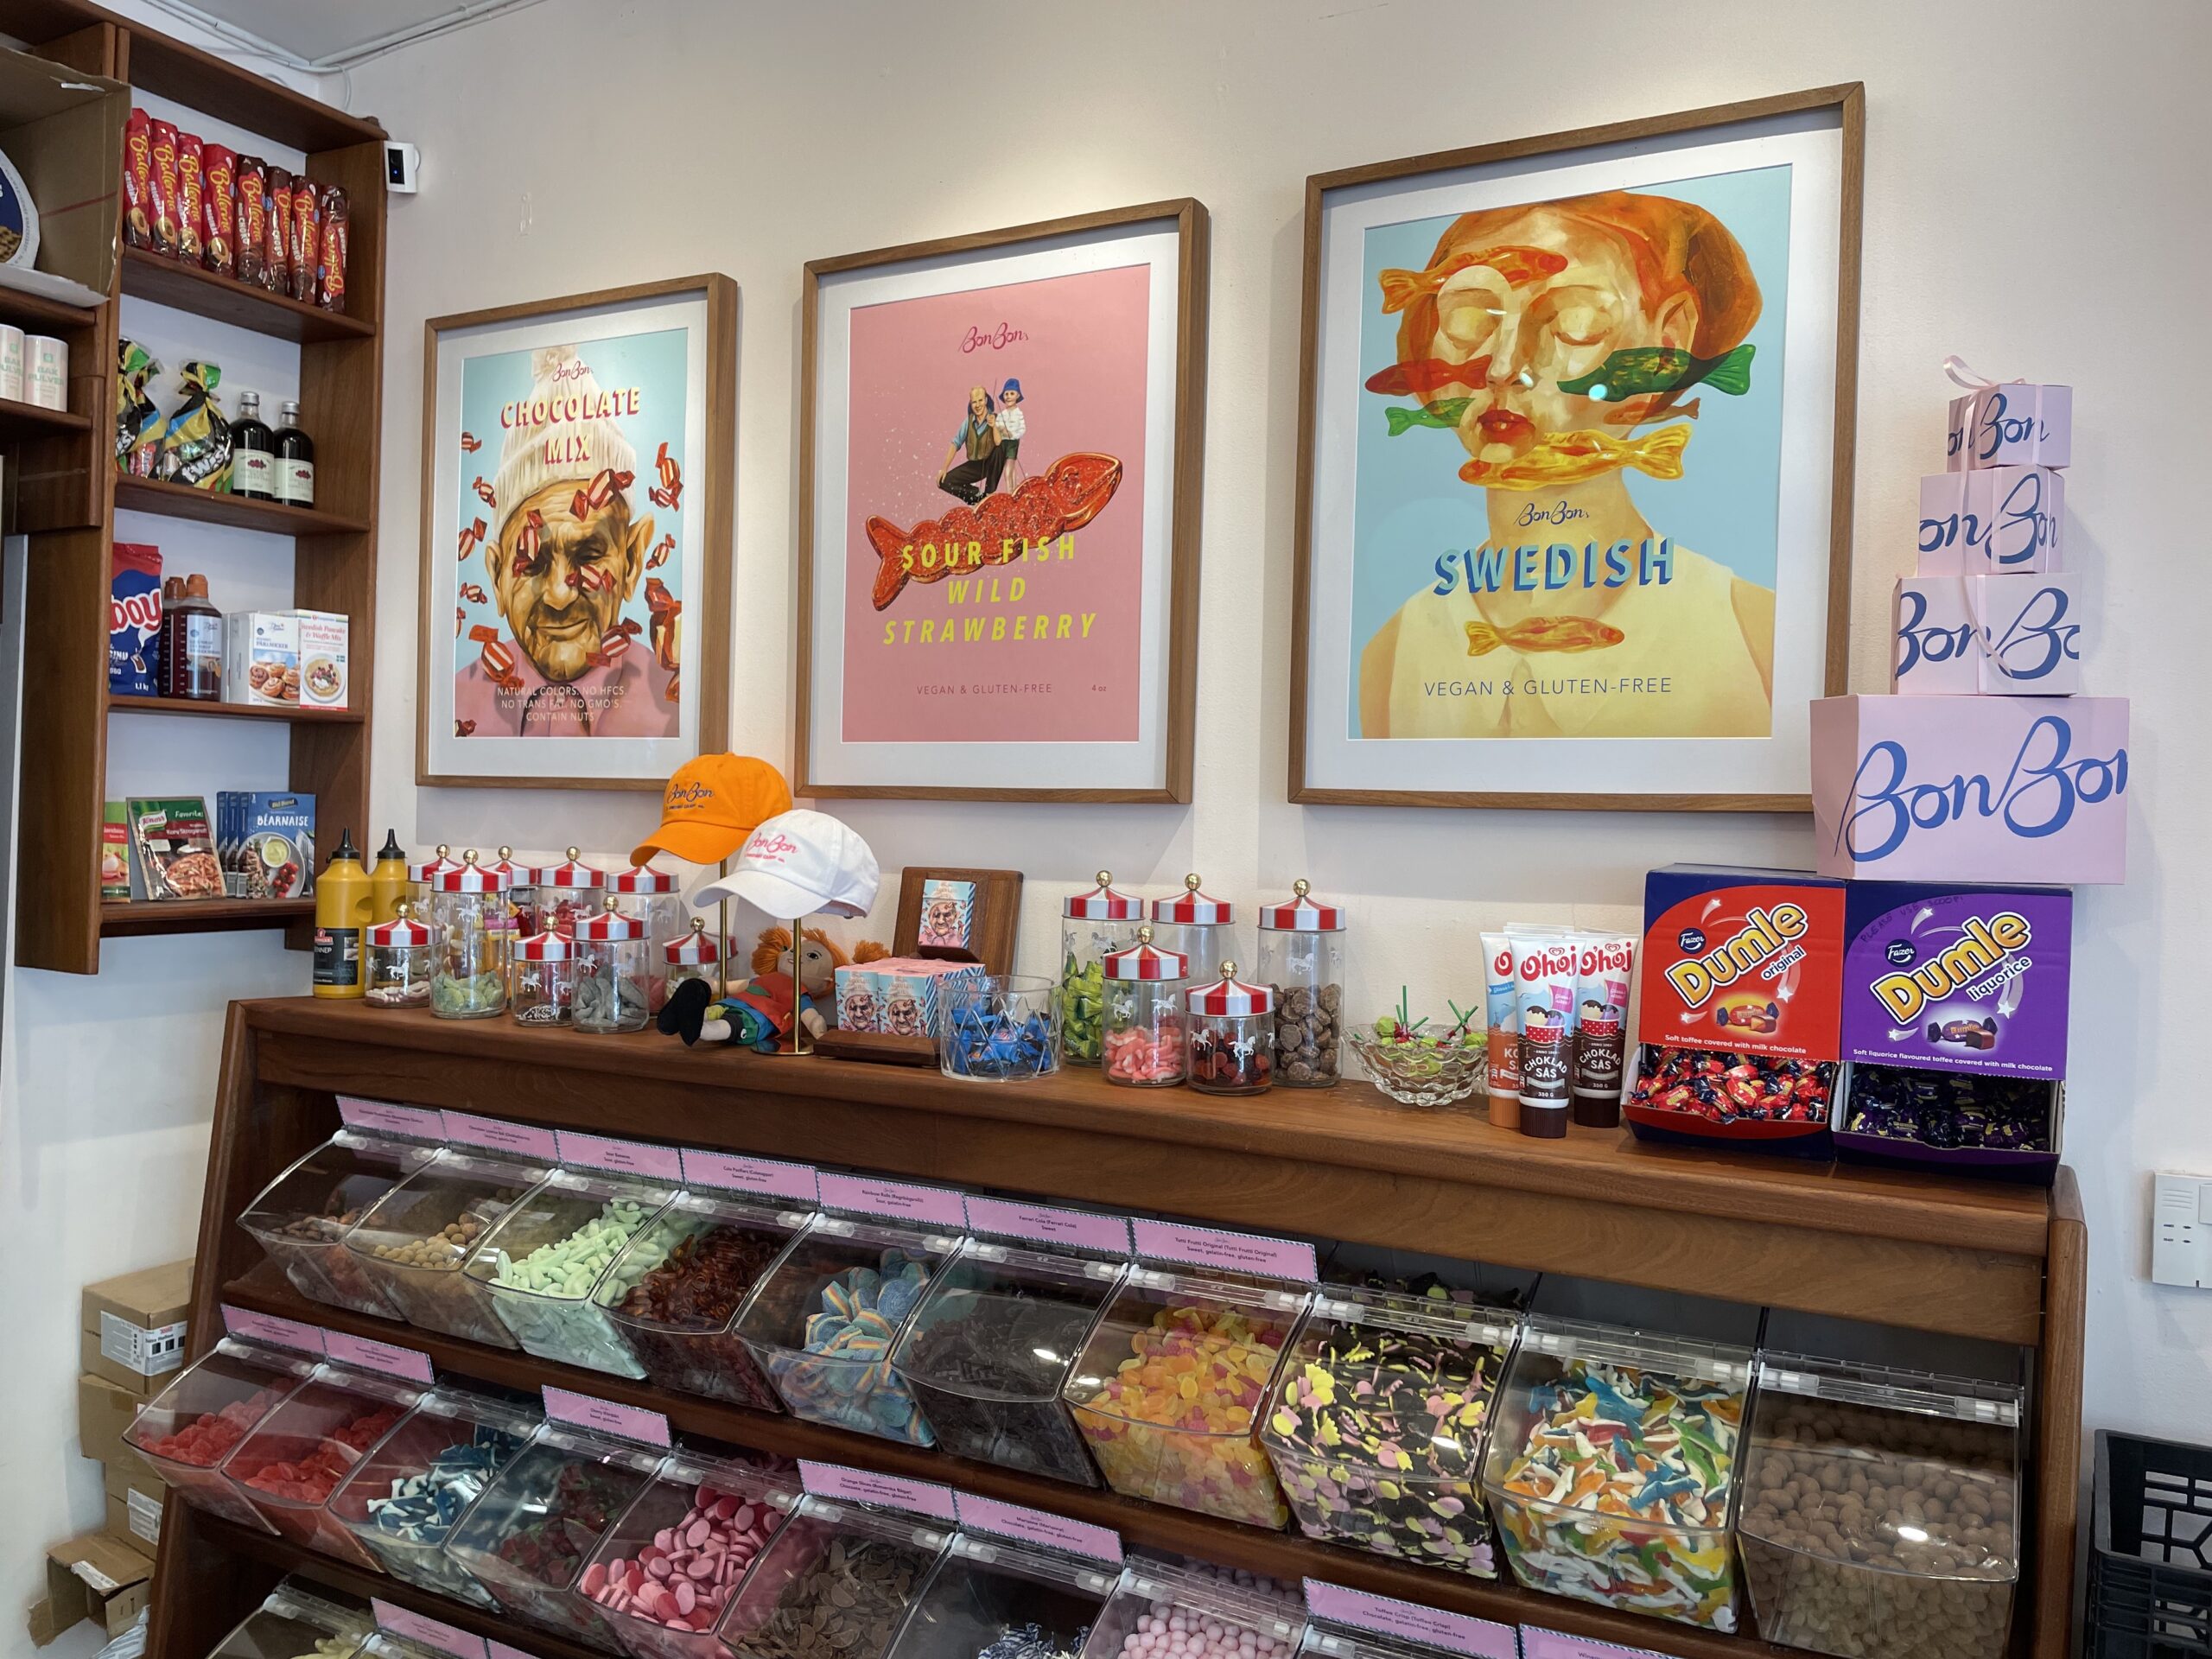 Bon Bon - A Swedish Candy Shop on the Lower East Side